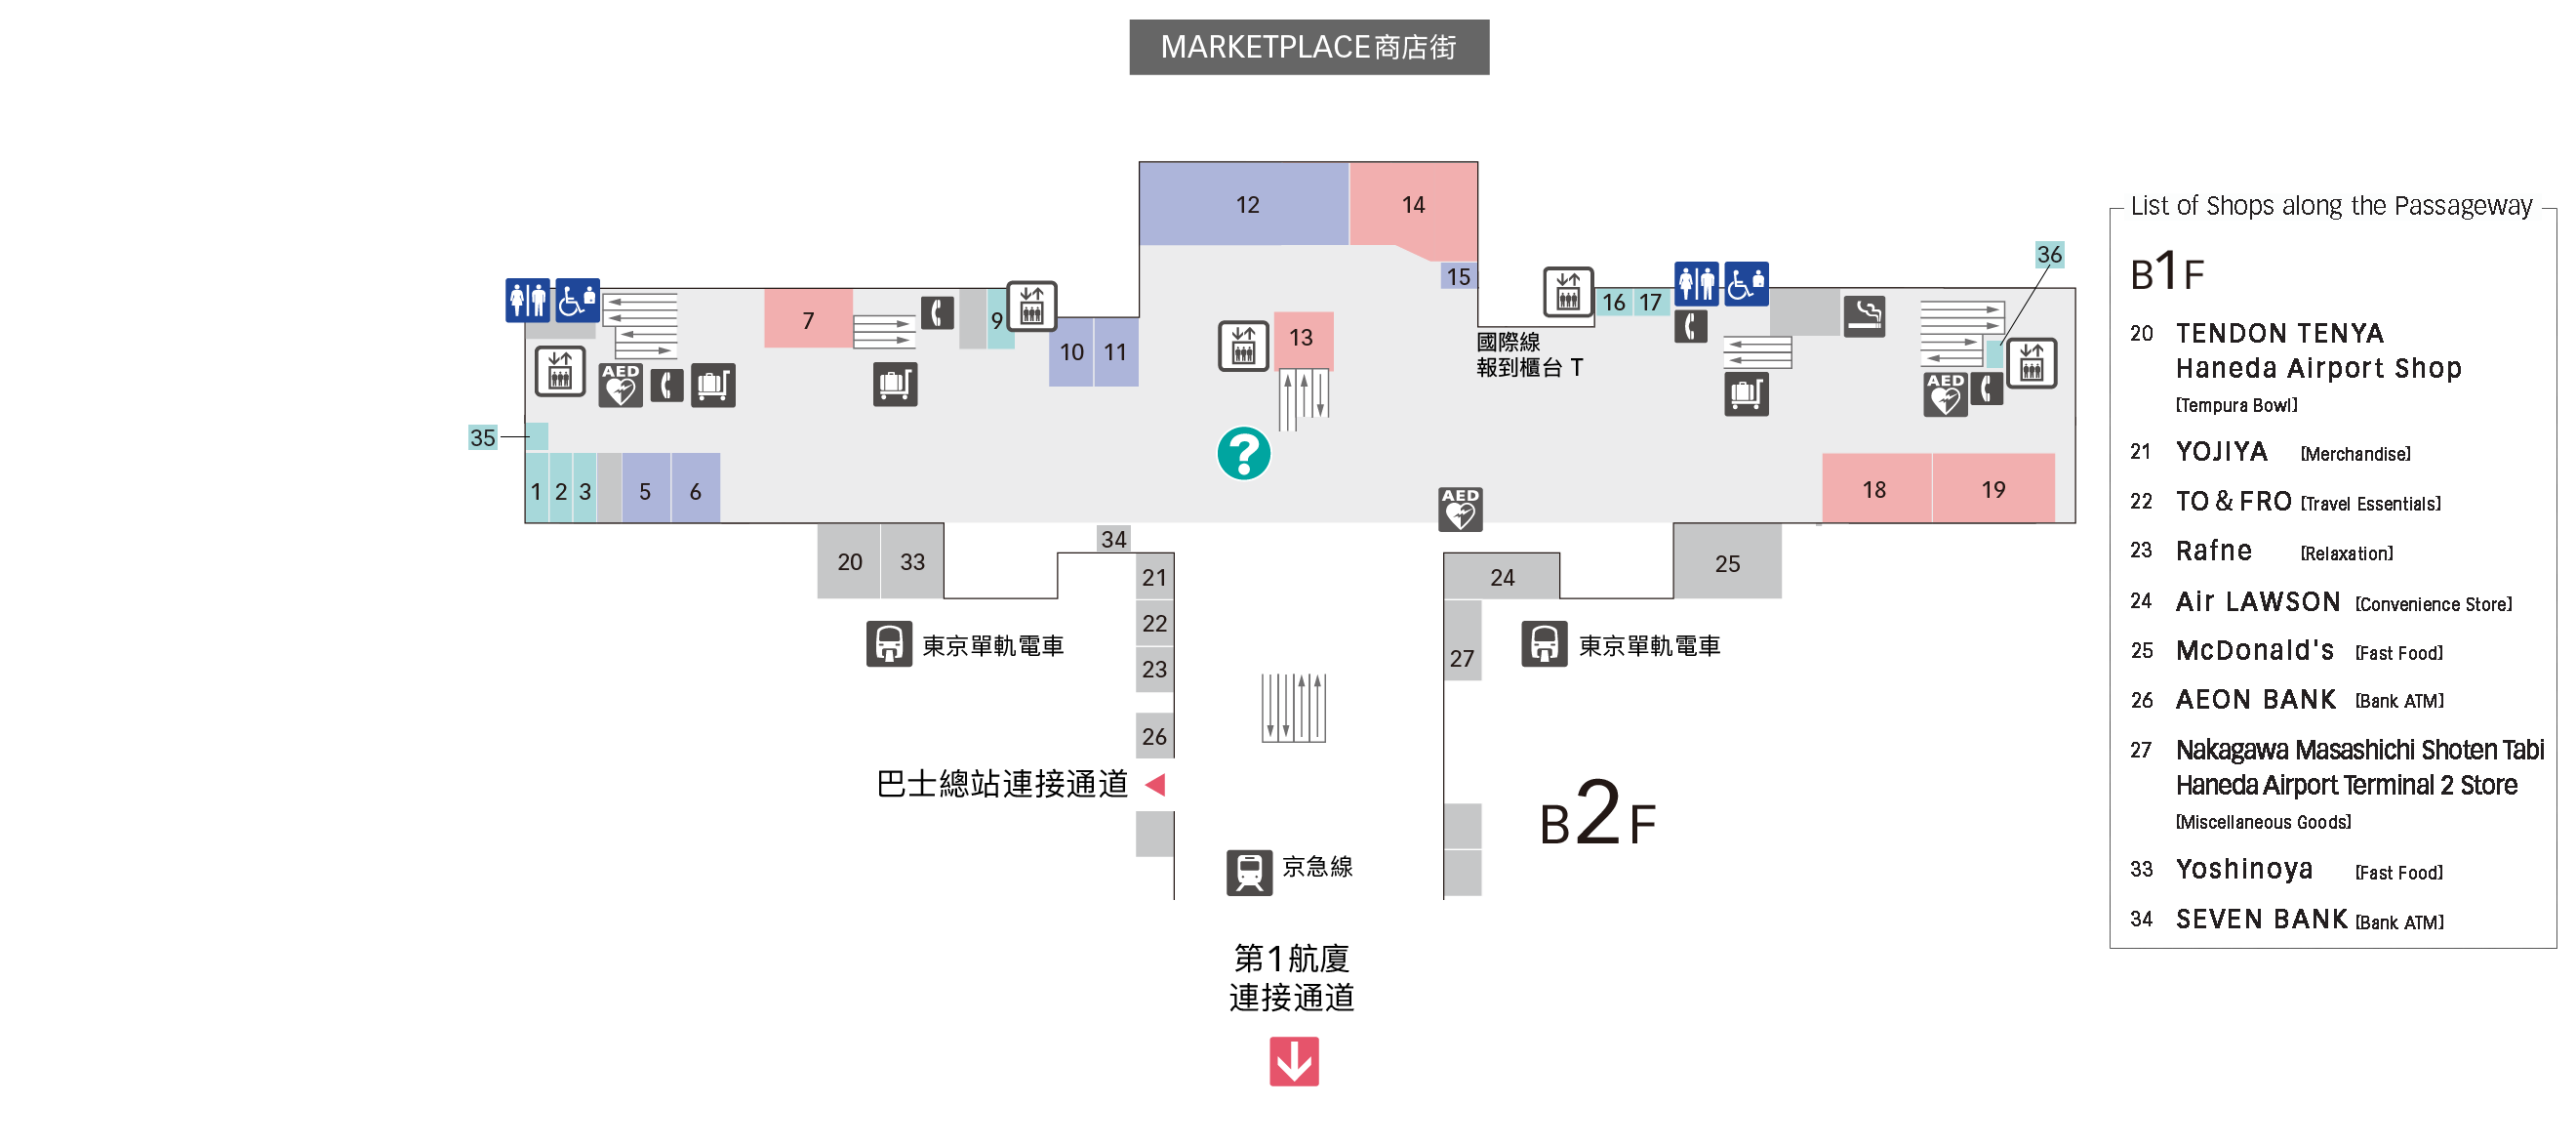 B1F 京急線 / 東京單軌電車樓層地圖